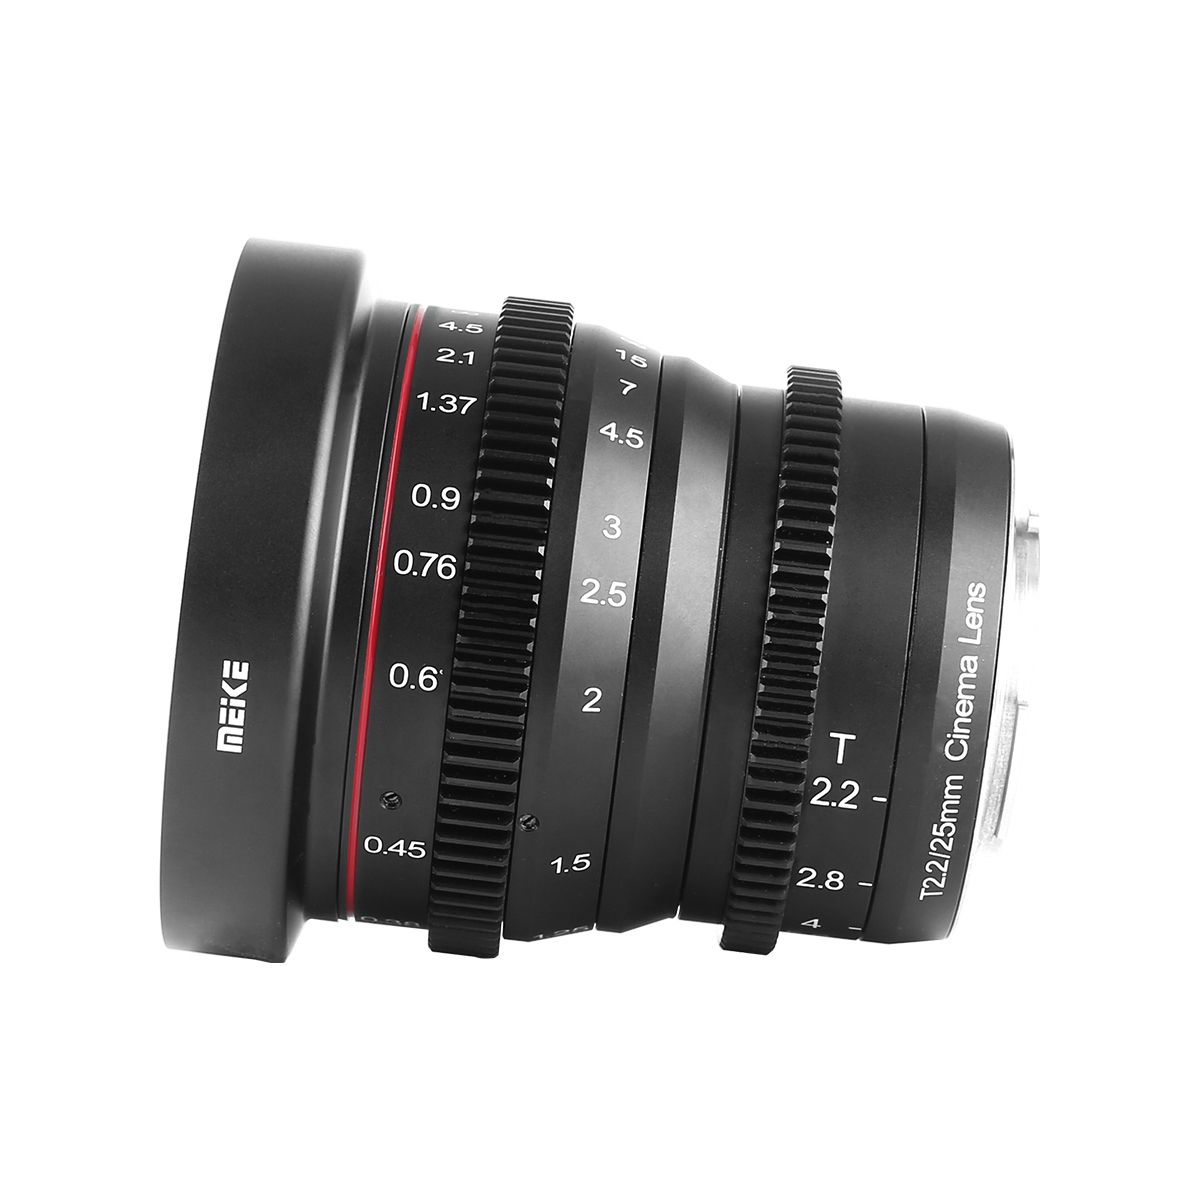 Meike 25mm T2.2 Sony Cinema lens